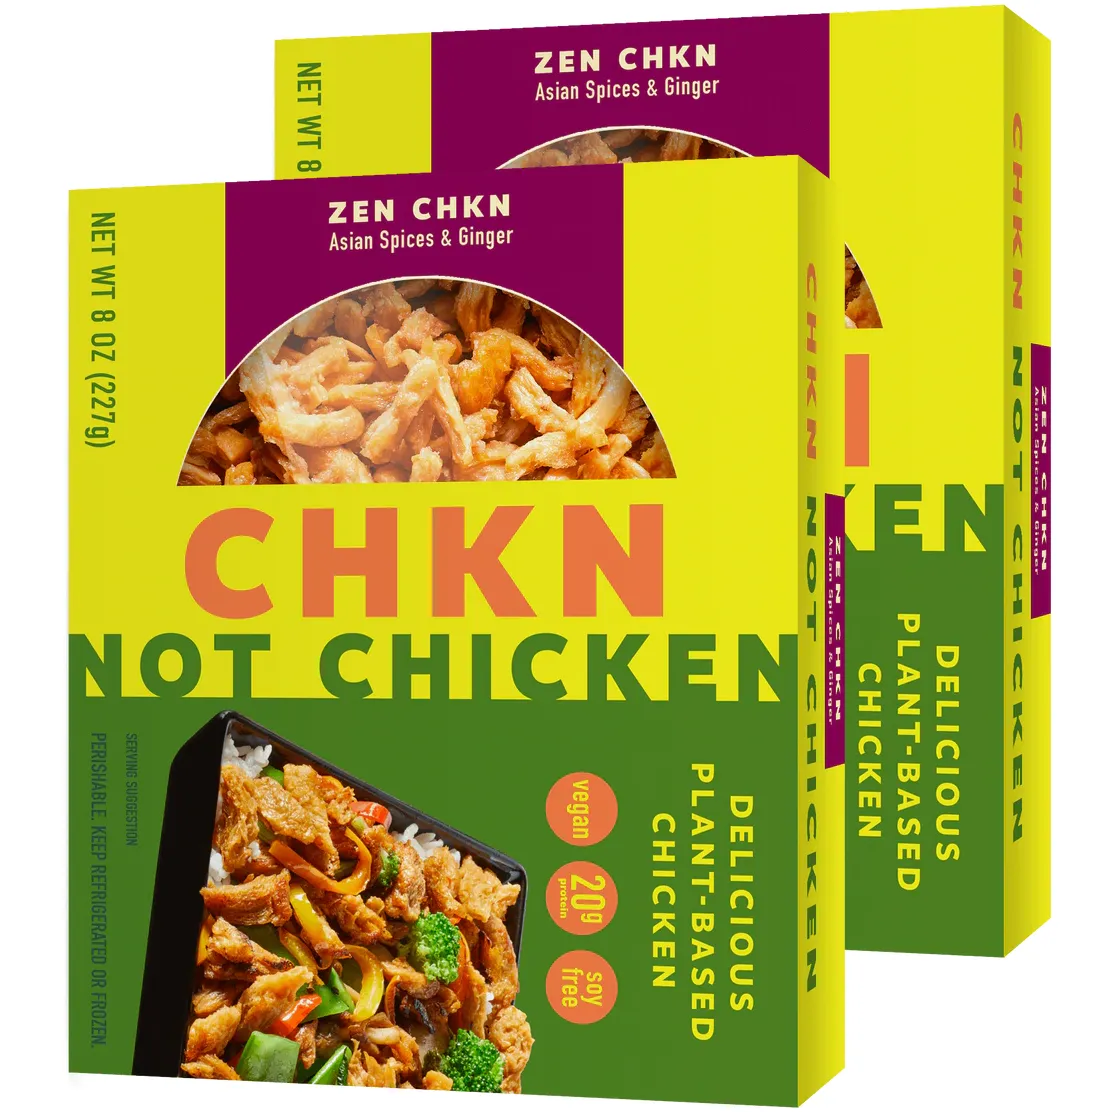 Free CHKN Not Chicken